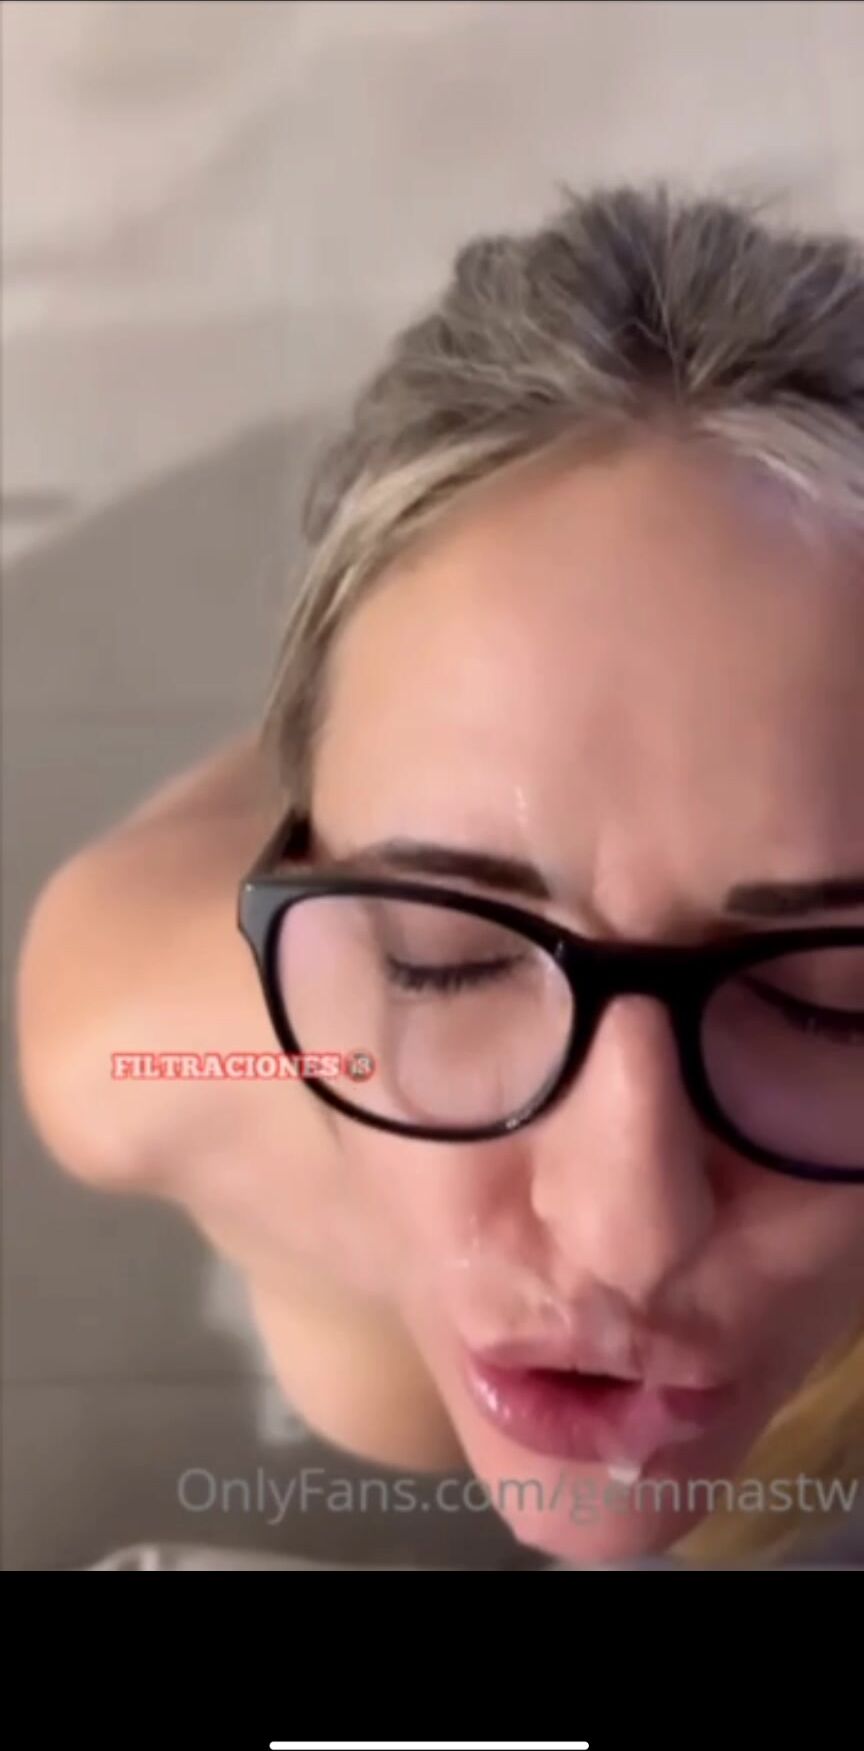 Cumming on the glasses of GemmaSTW